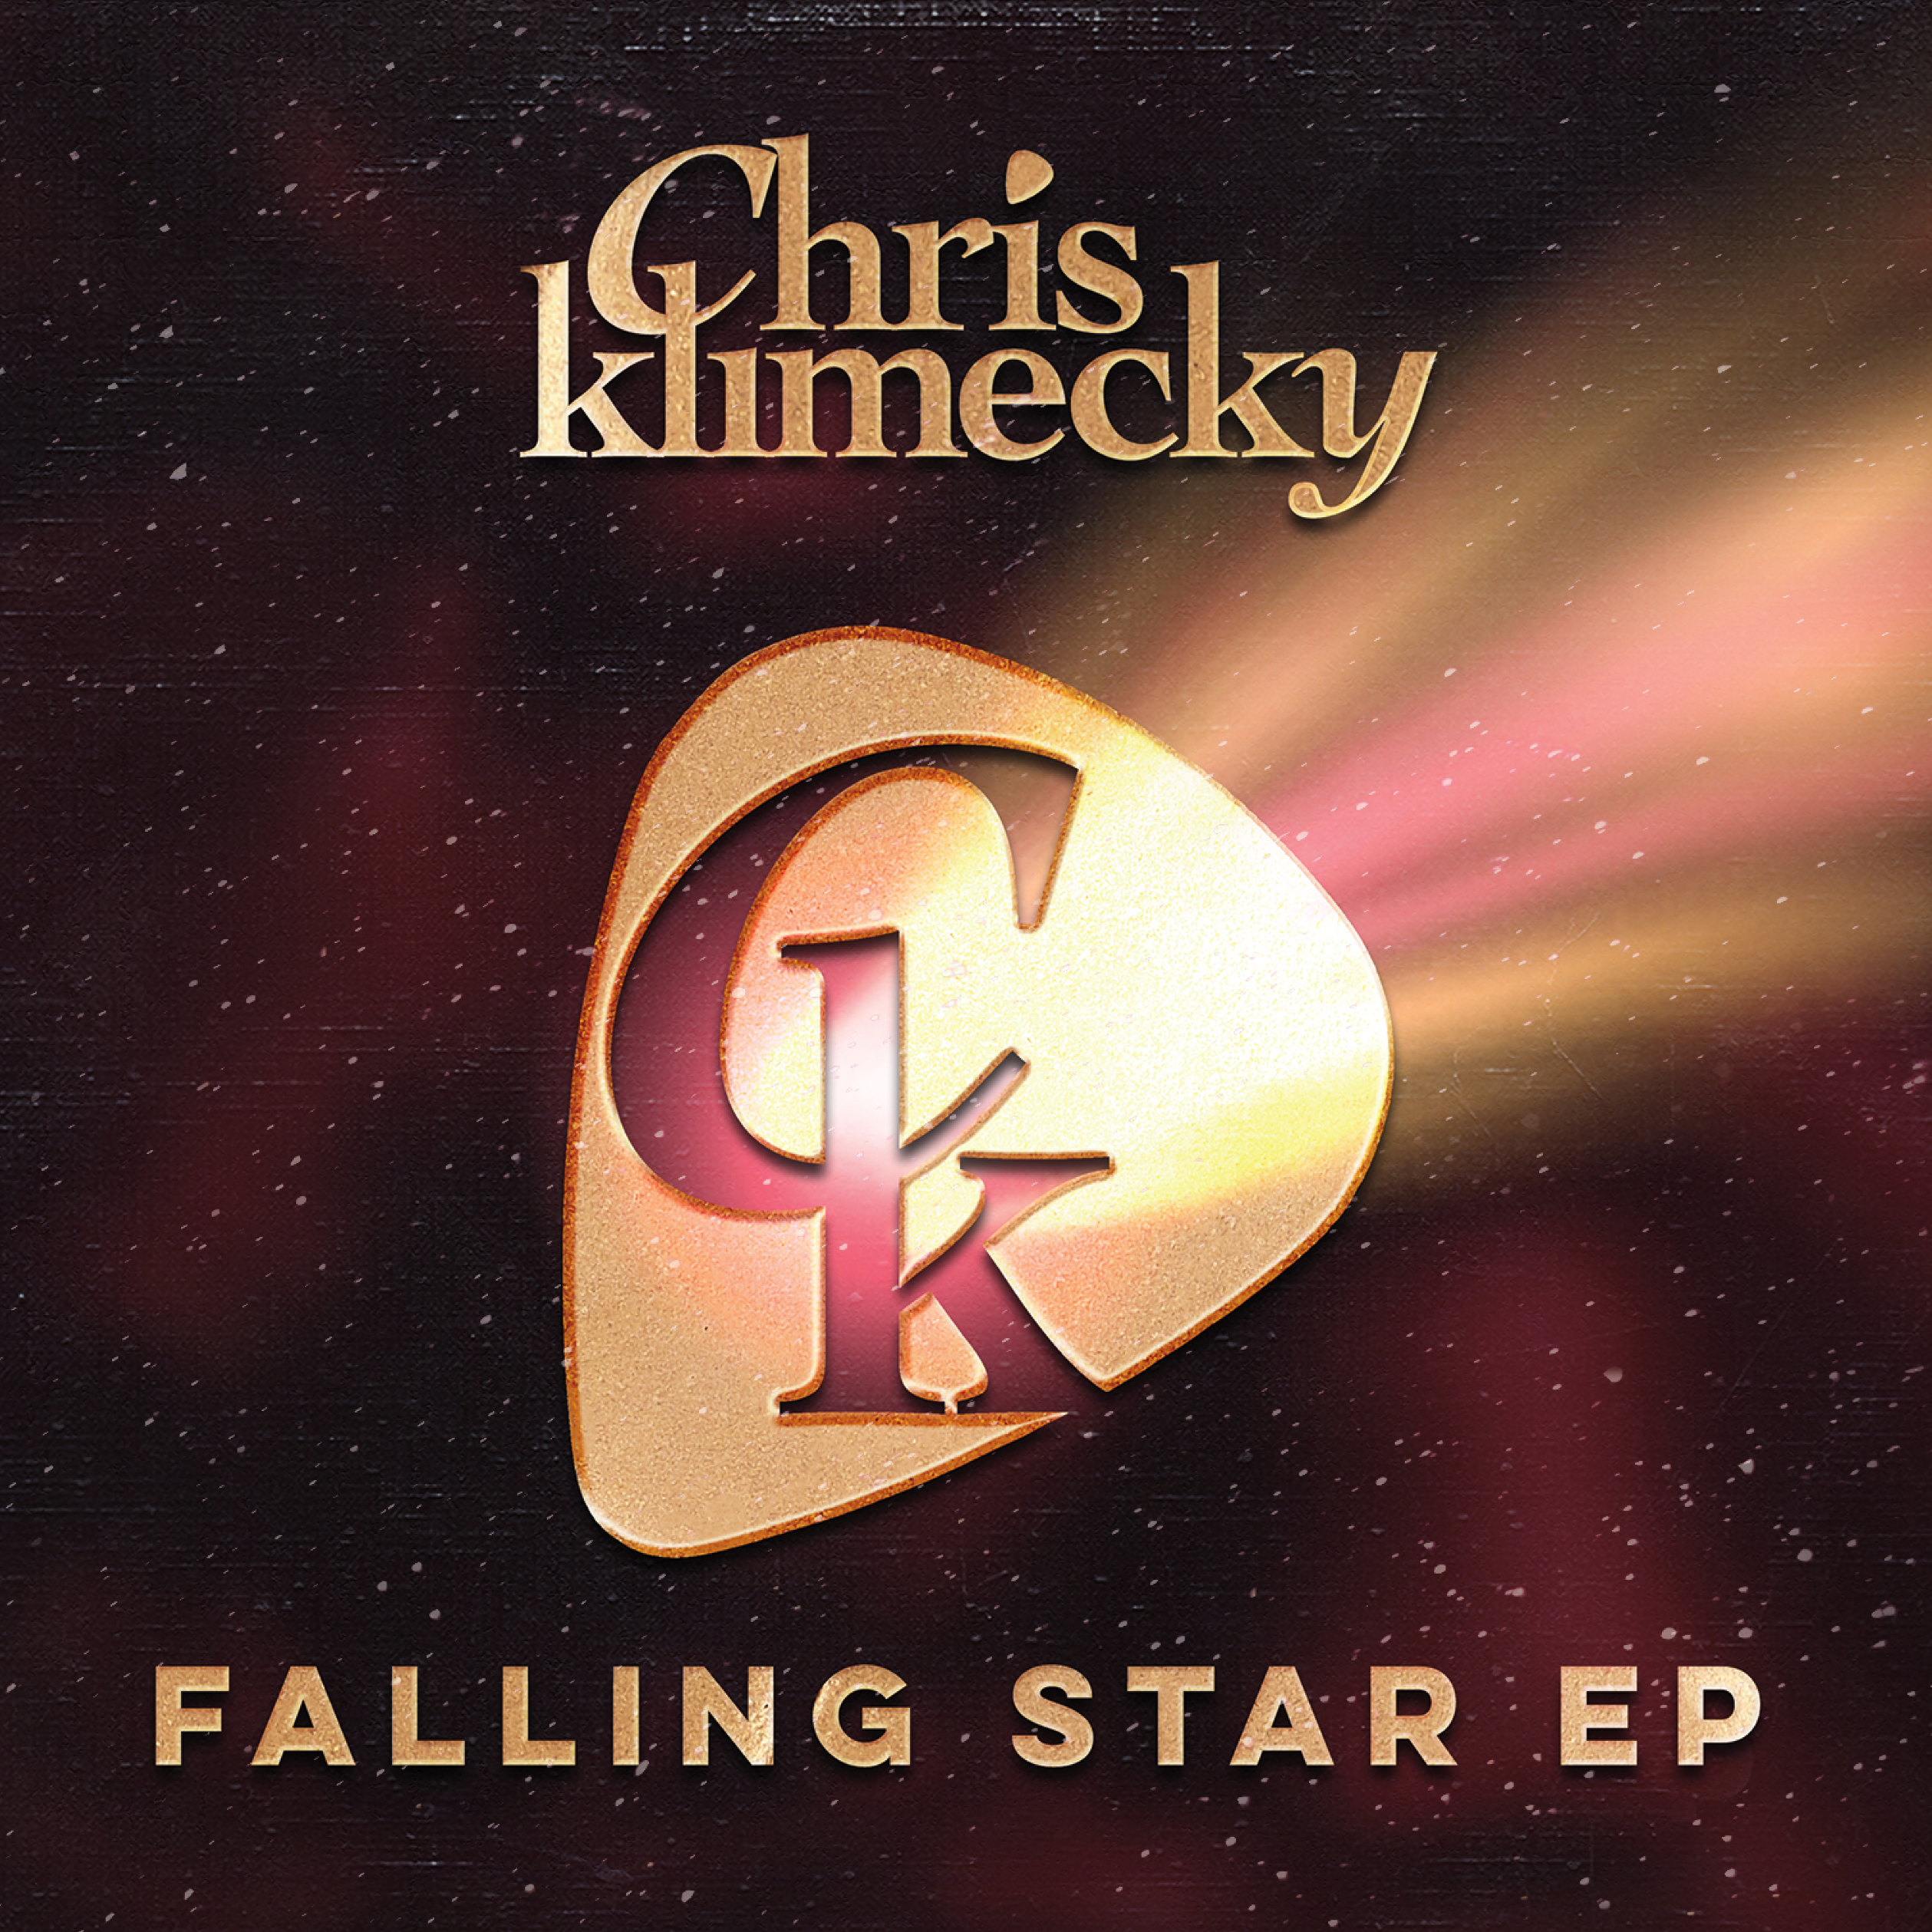 Chris Klimecky – “Falling Star EP” album release